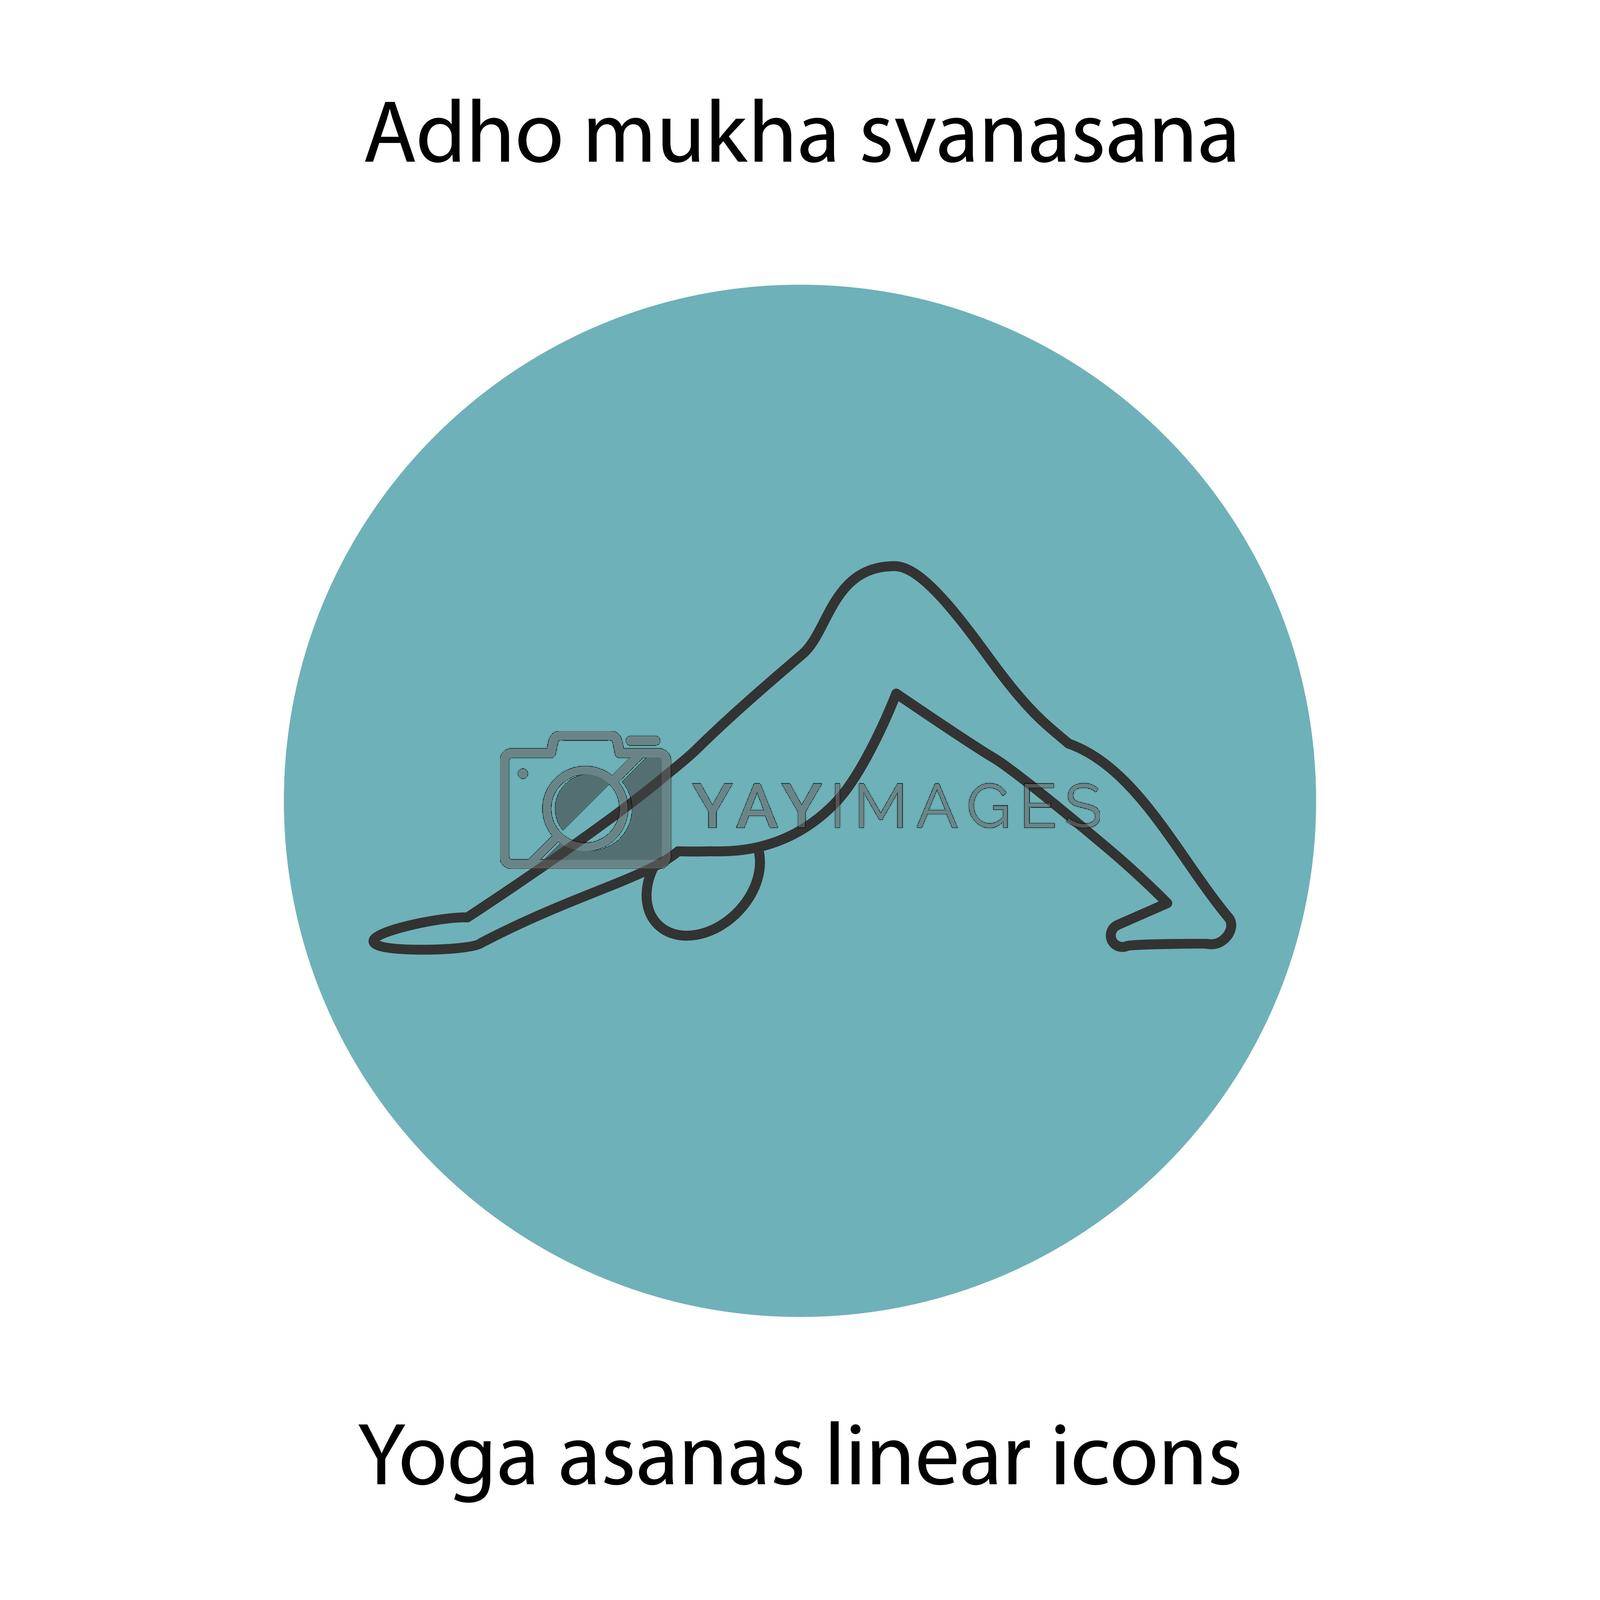 Adho mukha svanasana yoga position. Linear icon. Thin line illustration. Yoga asana contour symbol. Vector isolated outline drawing